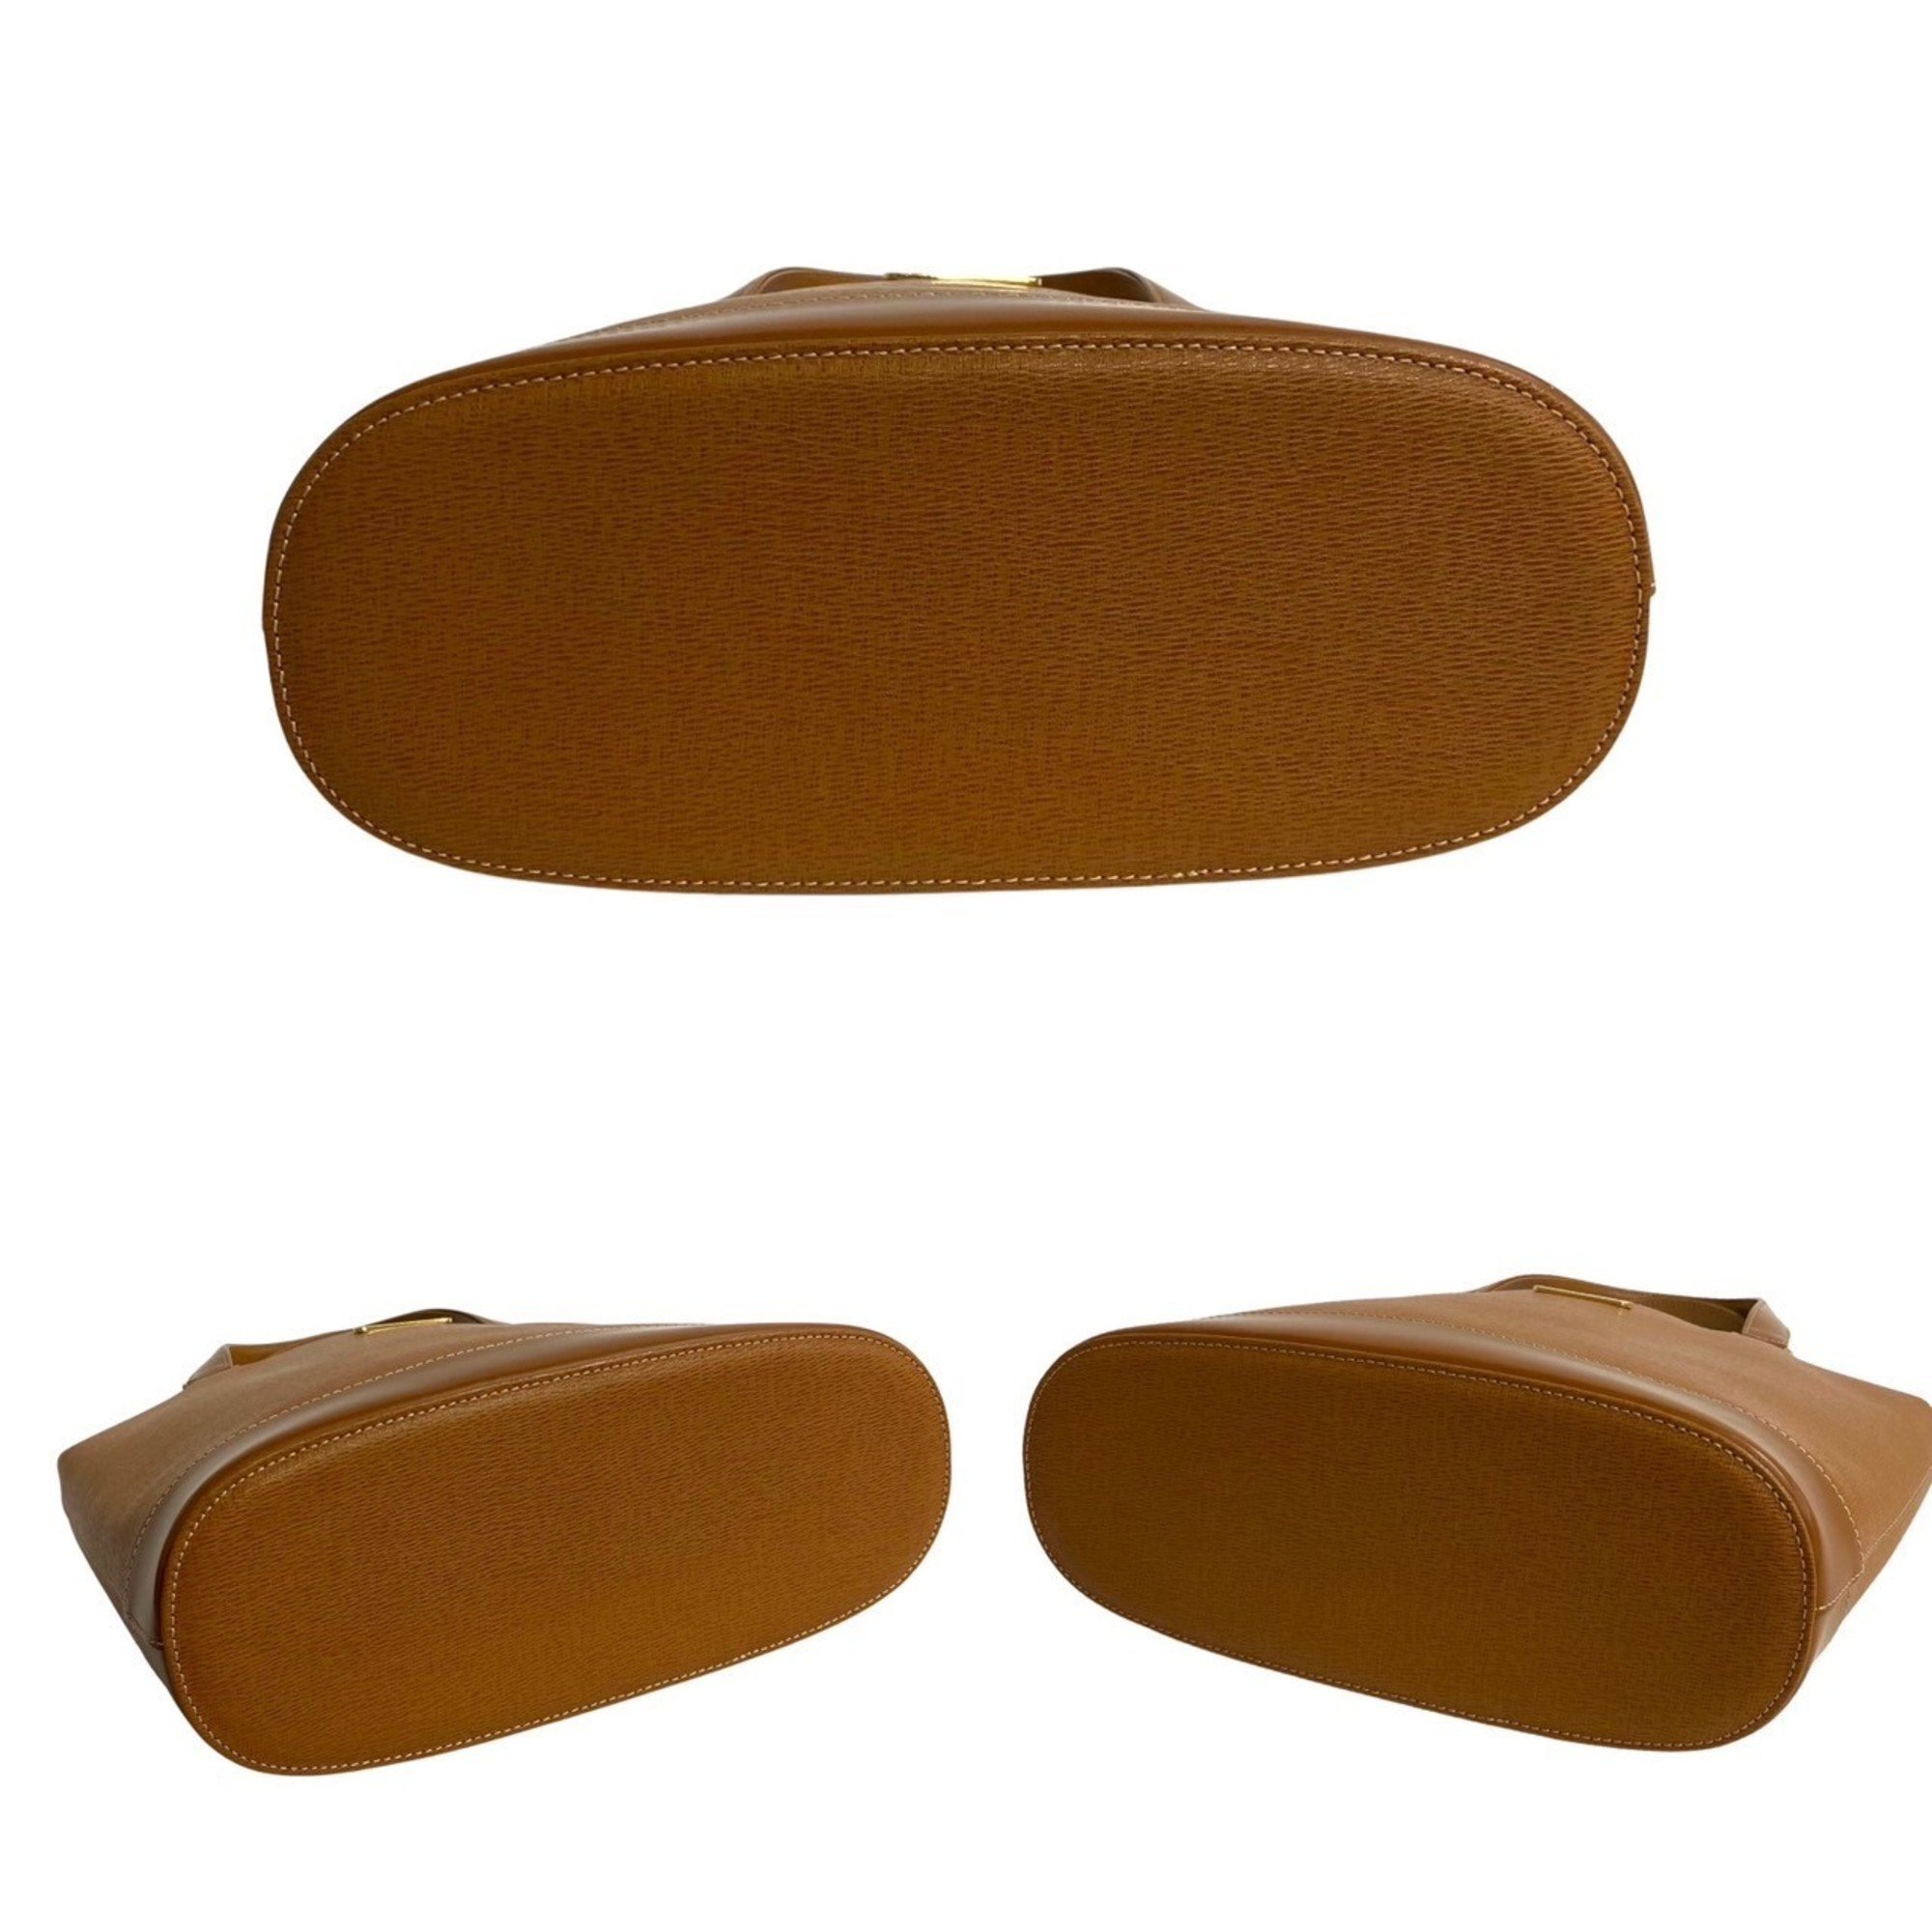 BURBERRY Nova Check Logo Hardware Leather Genuine Handbag Mini Tote Bag Brown 26647